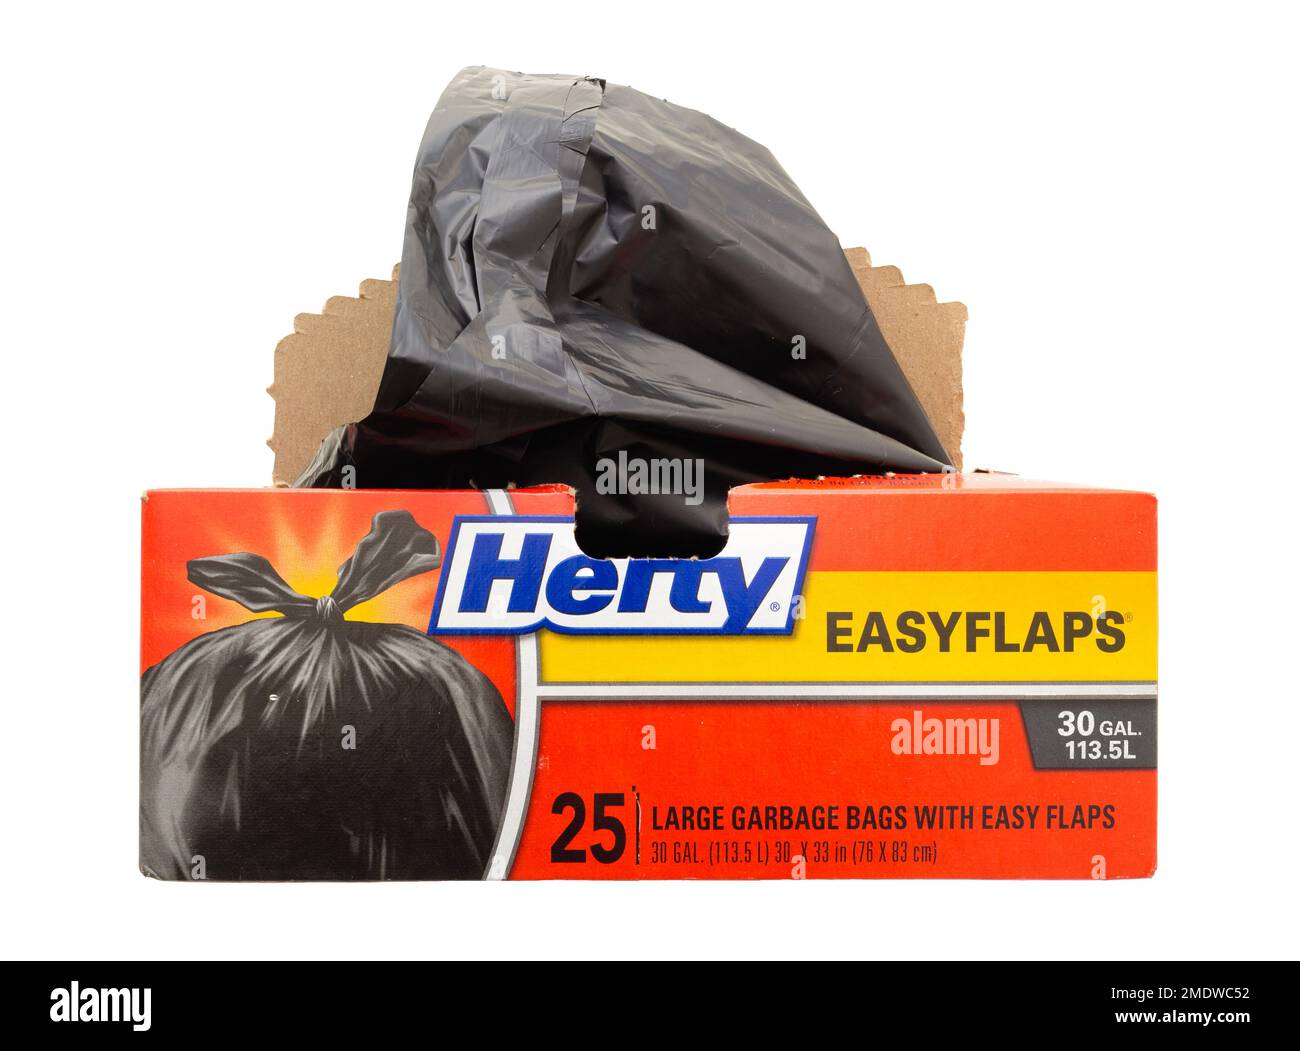 Hefty Easy Flaps 30-gallon Large Trash Bags